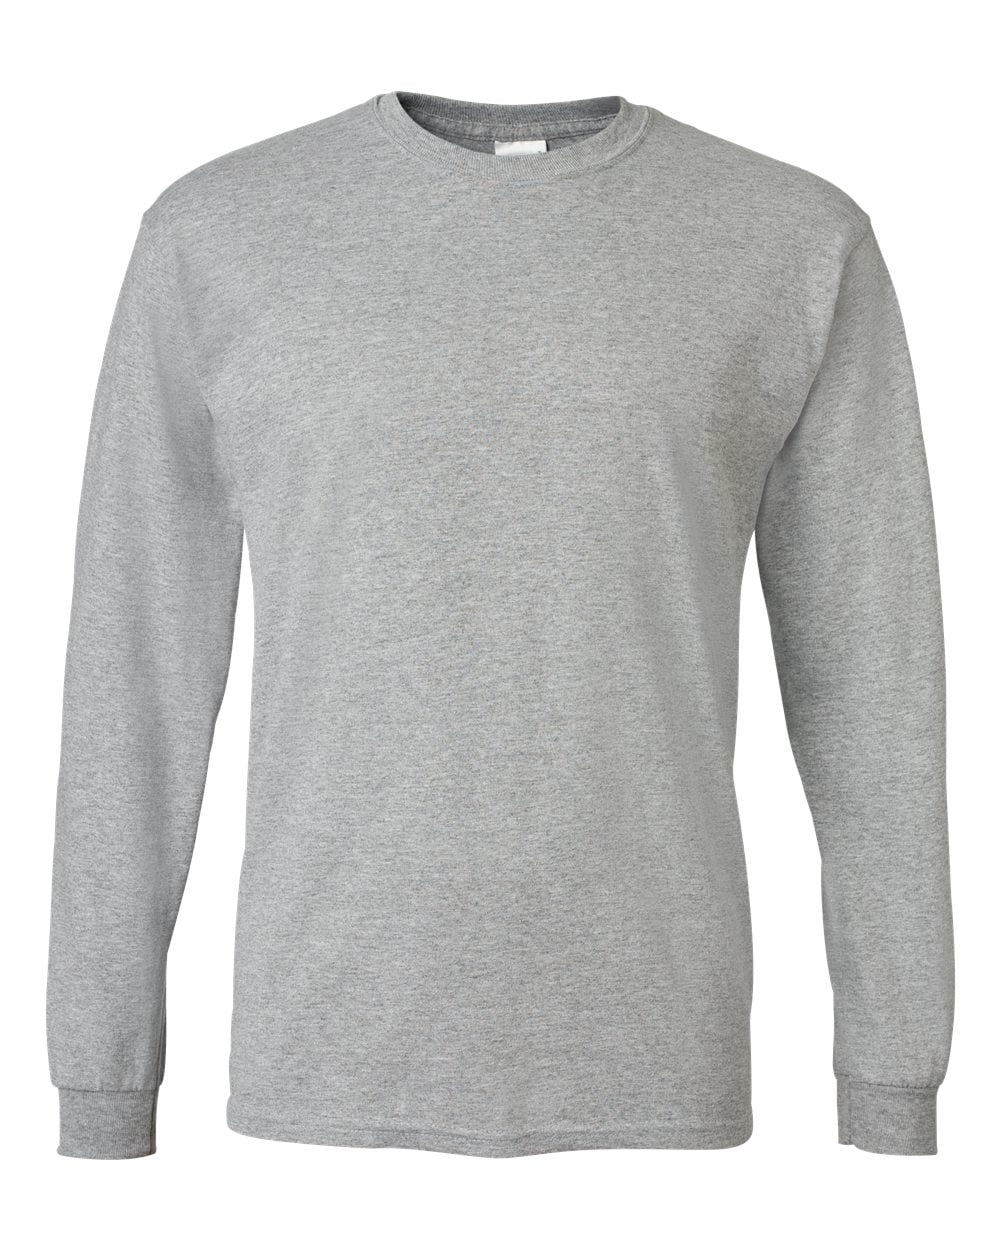 Adult 5.5 oz., 50/50 Long-Sleeve T-Shirt - ASH GREY - M 